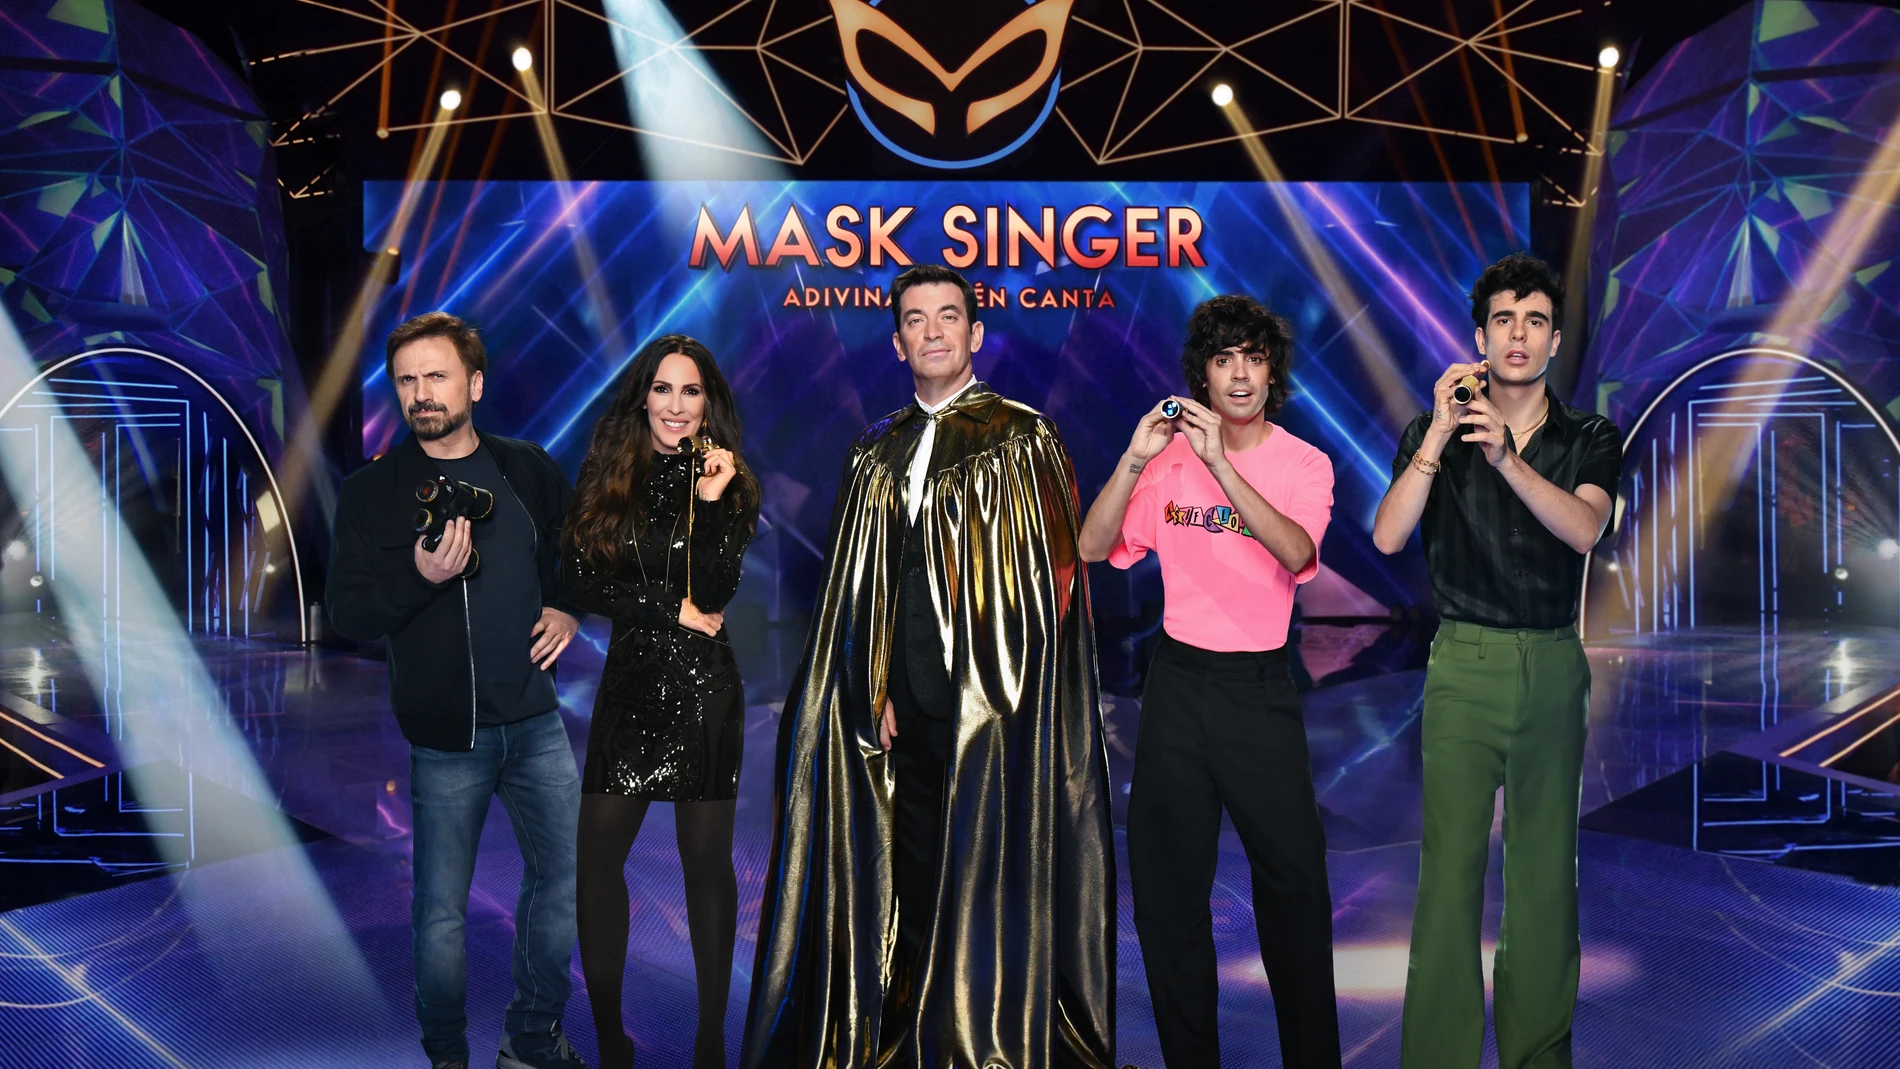 ‘Mask Singer: adivina quién canta’ se estrena el próximo miércoles 4 en Antena 3 